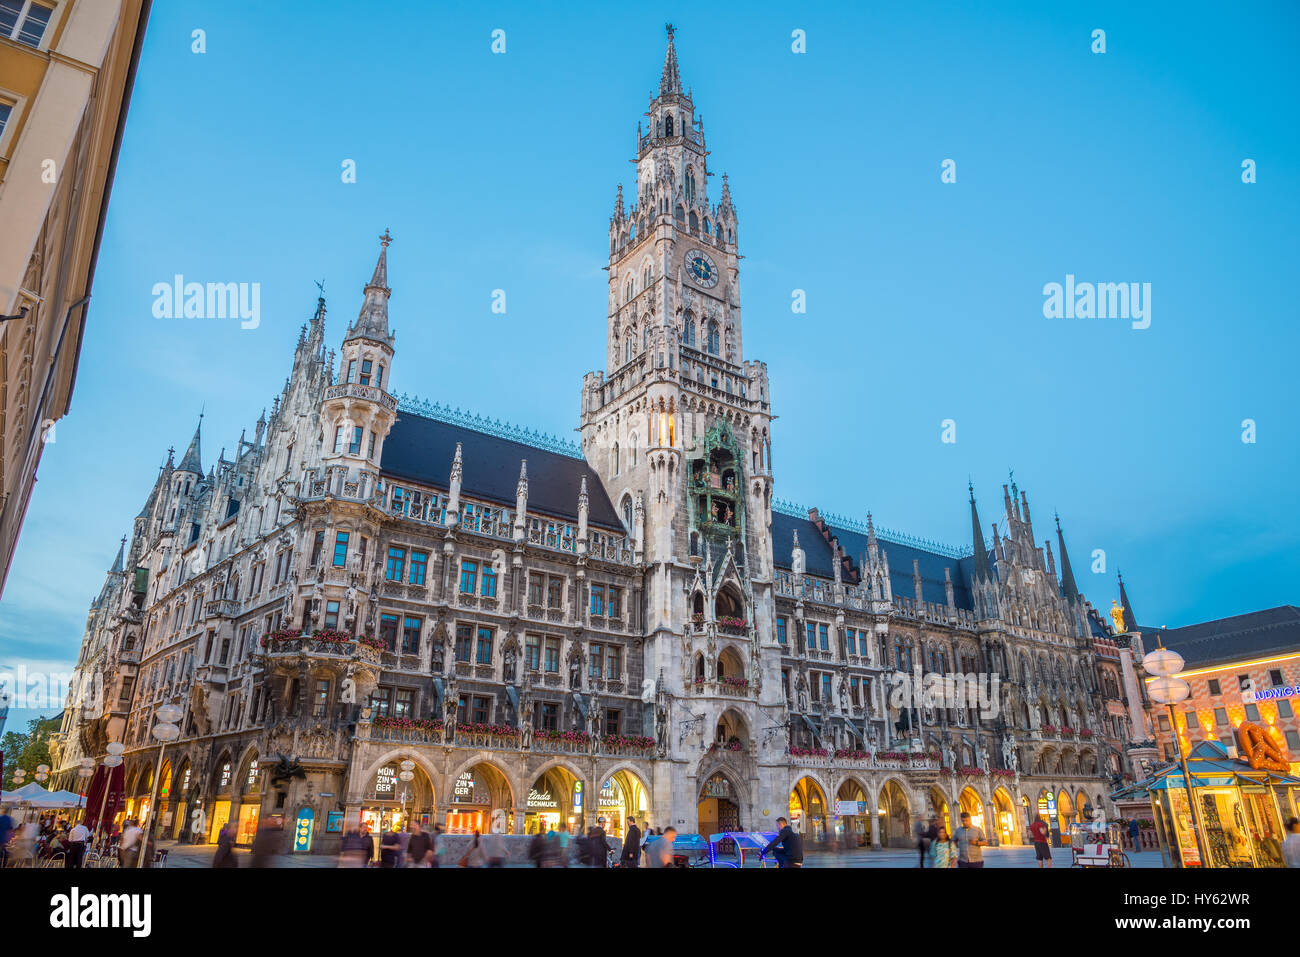 Munich, Germany - June 6, 2016: Munich Town Hall - Neue Rathaus on Marienplatz at night Stock Photo